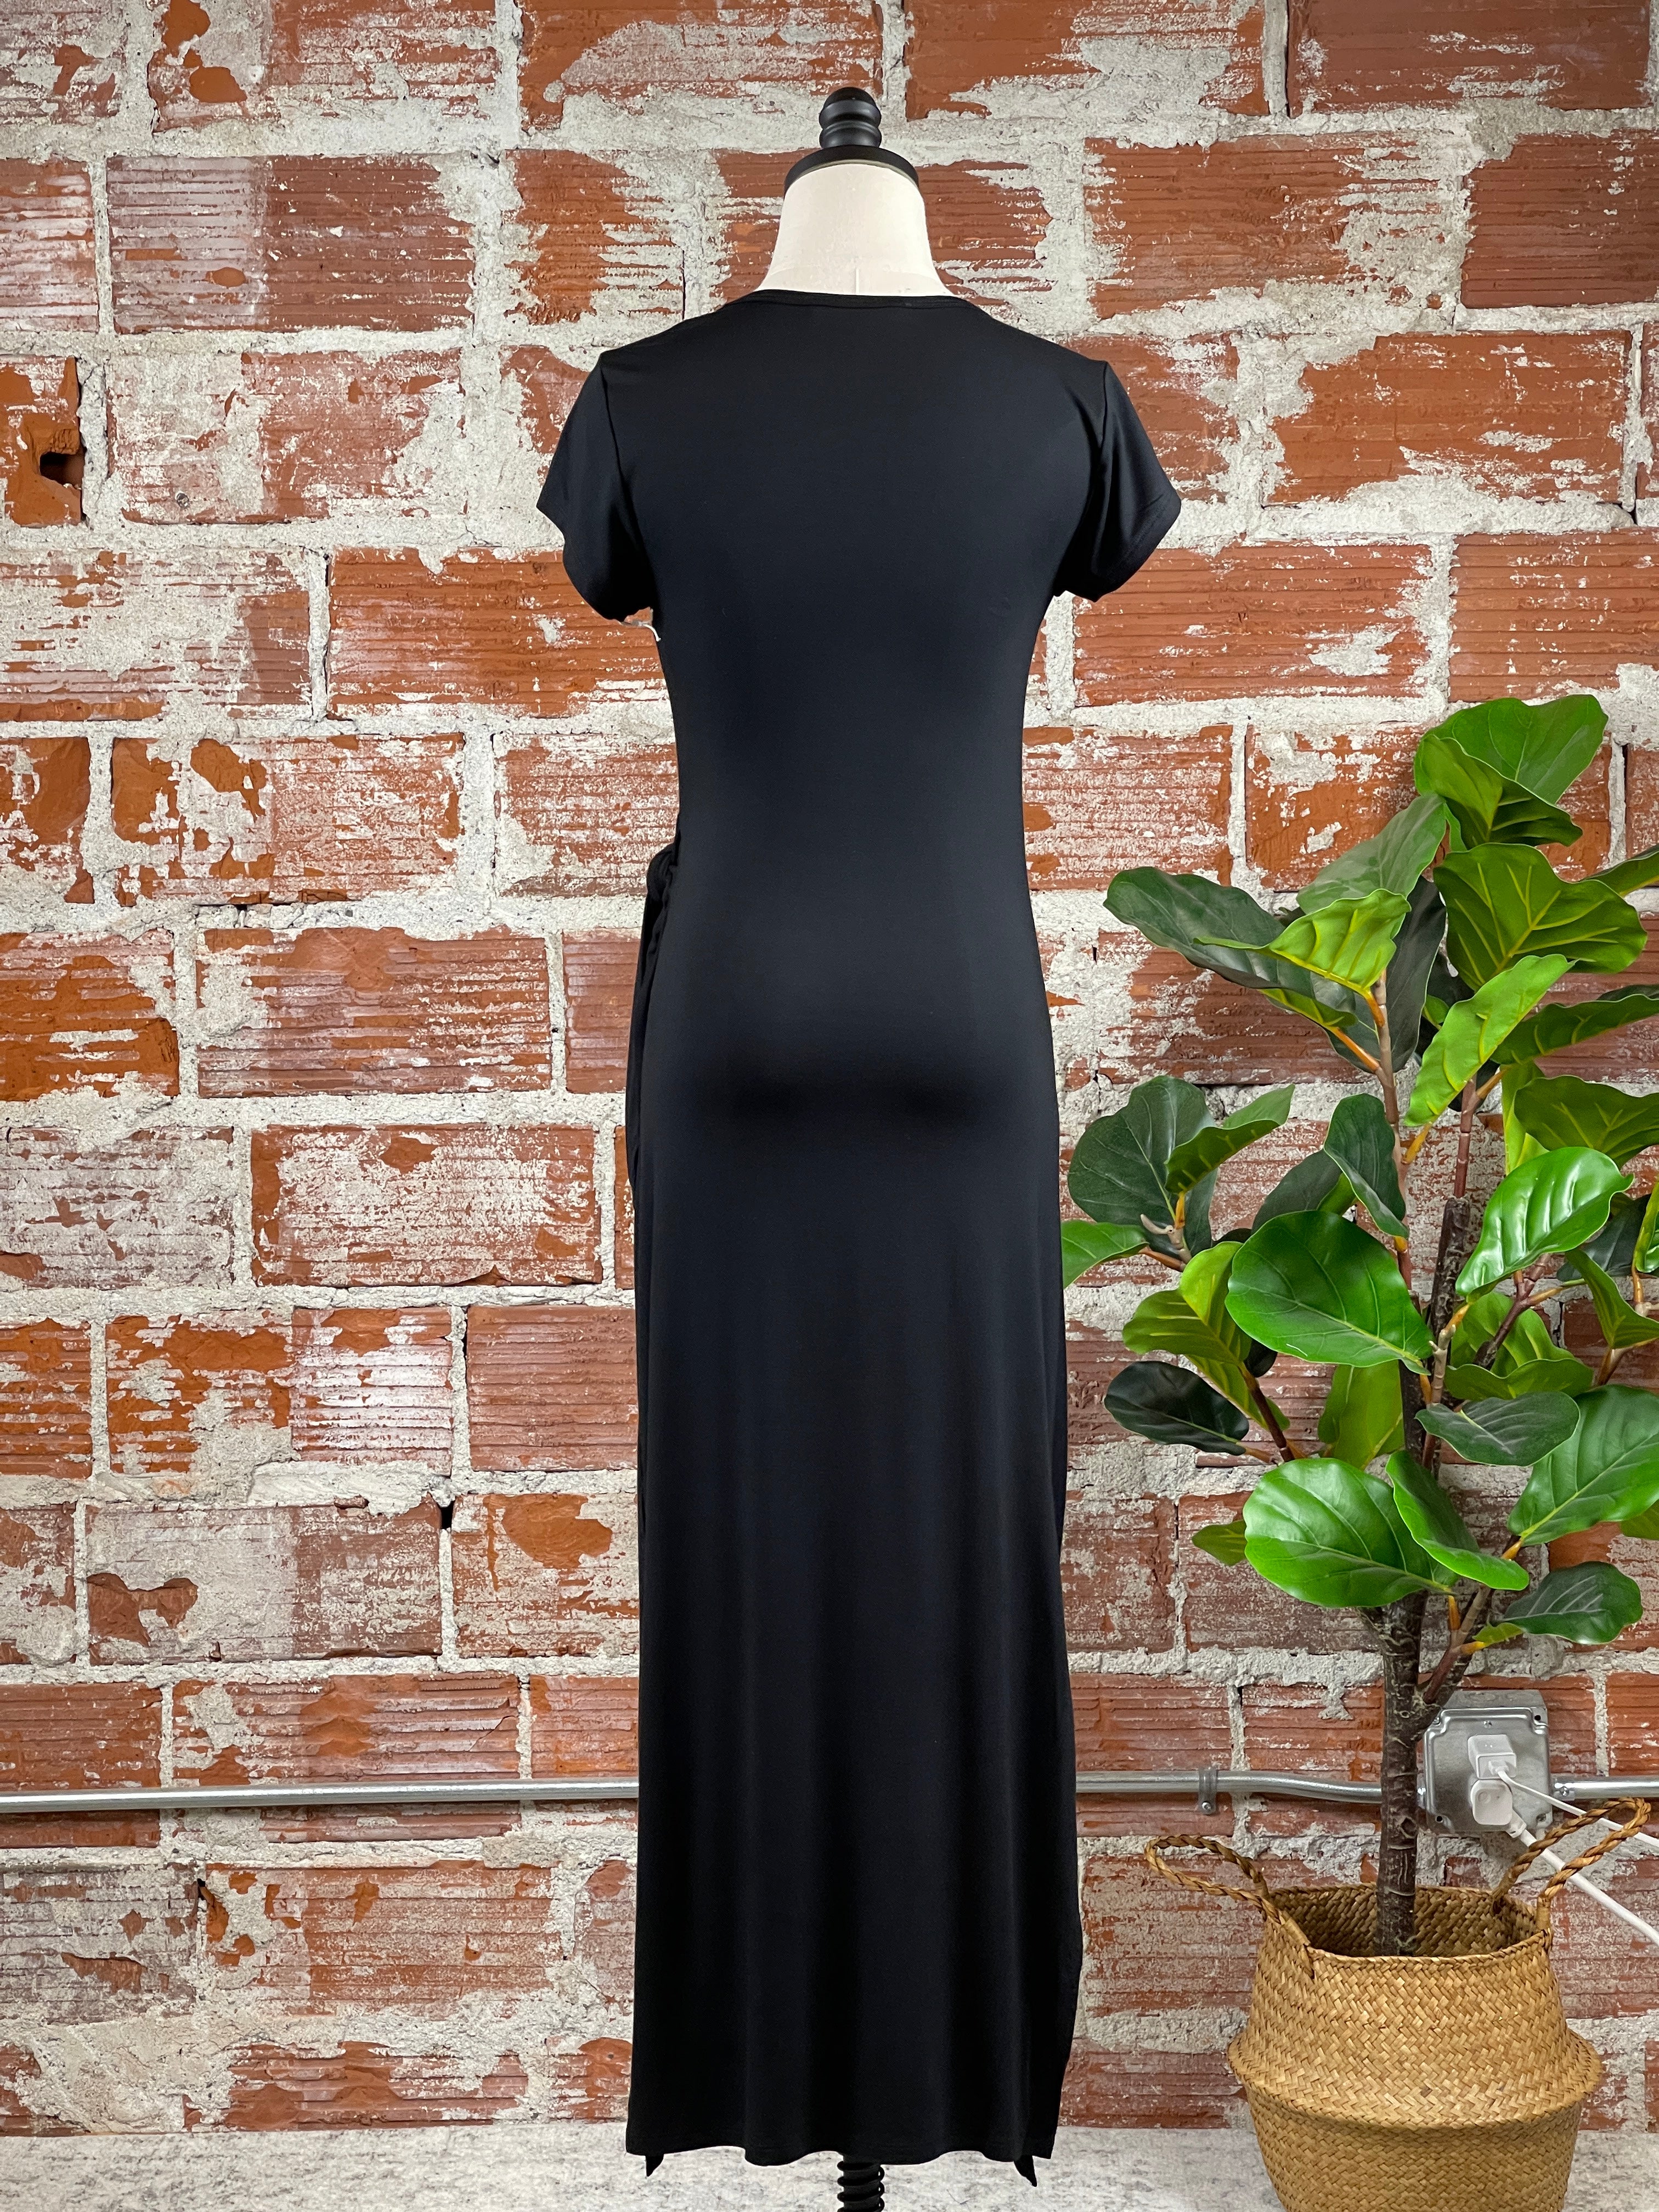 Dex Knotted Dress in Black-152 Dresses - Long-Little Bird Boutique